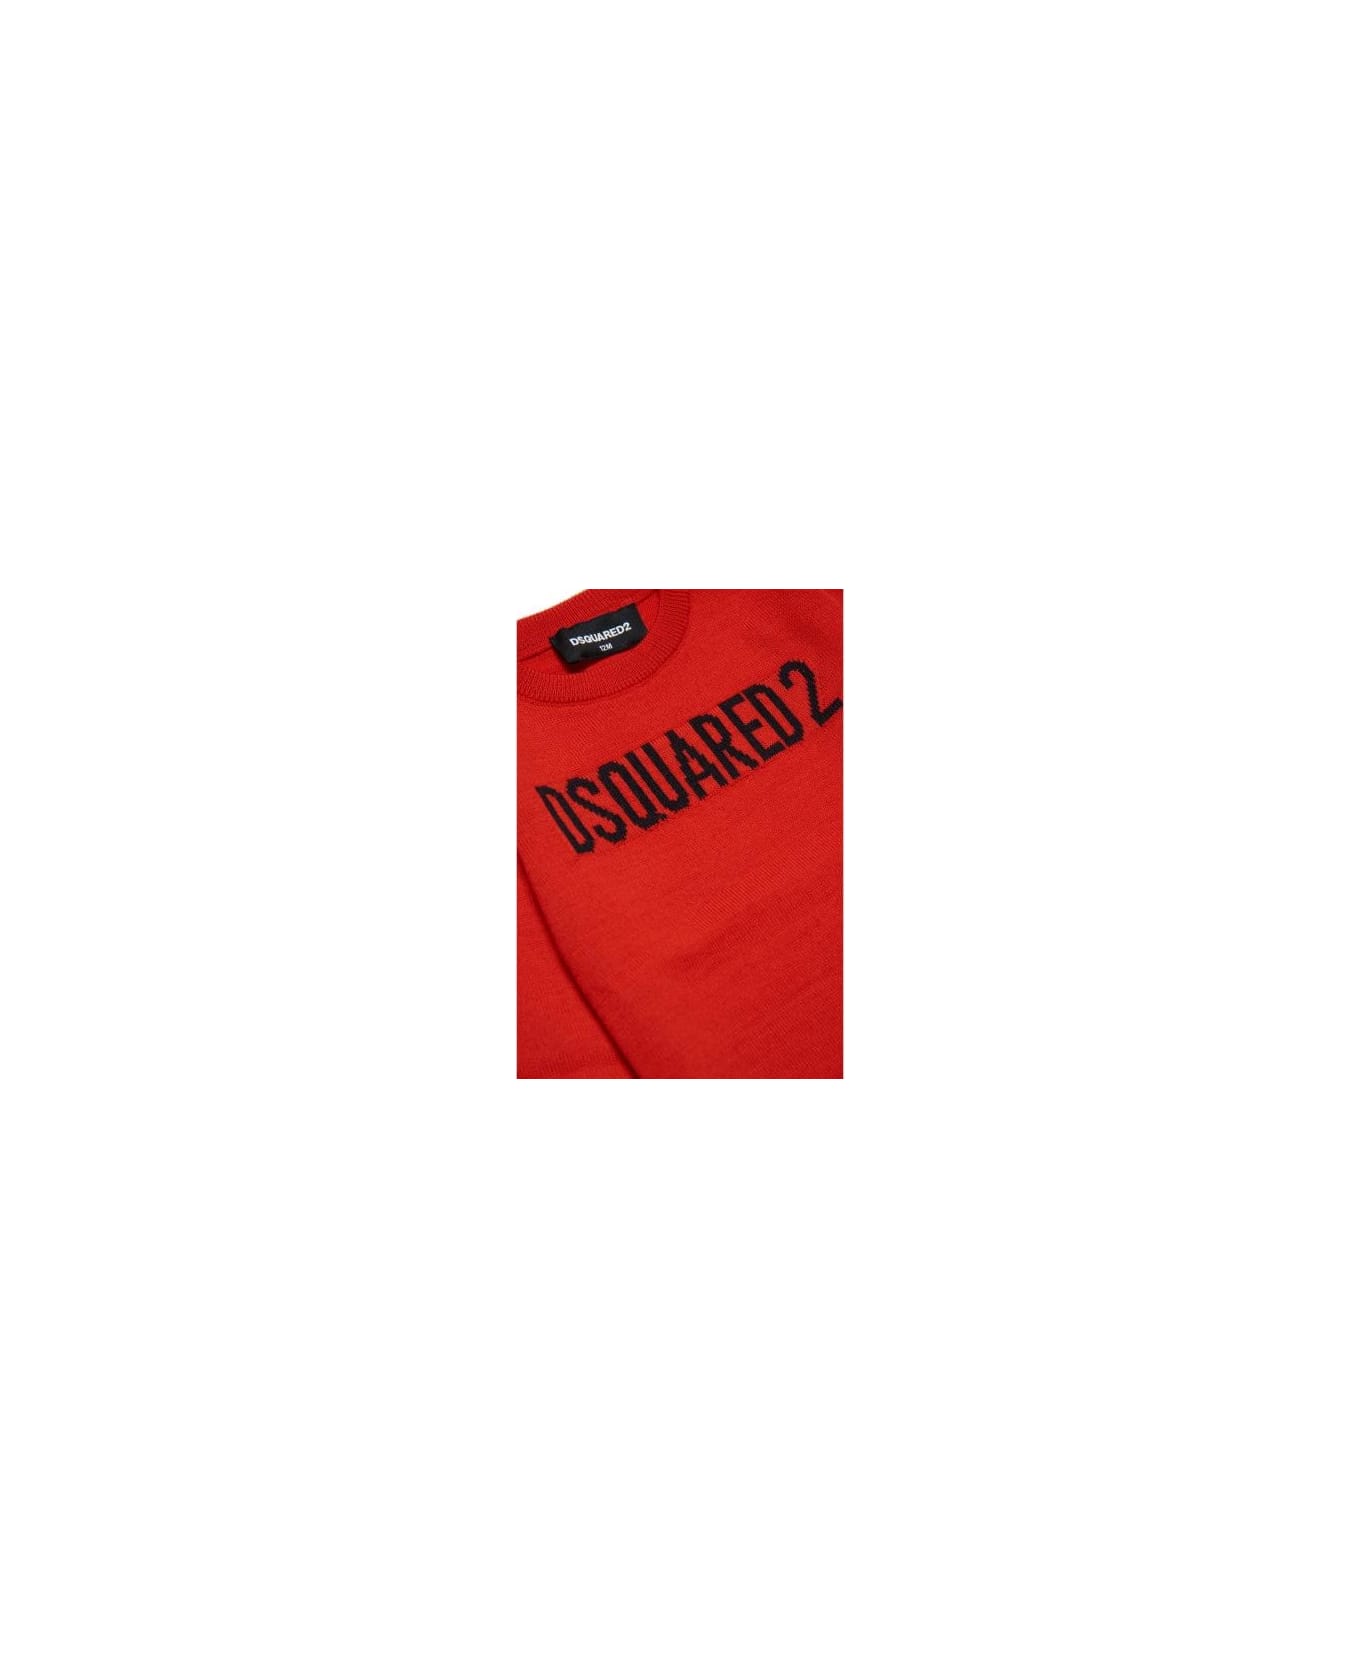 Dsquared2 Intarsia Sweater - Red